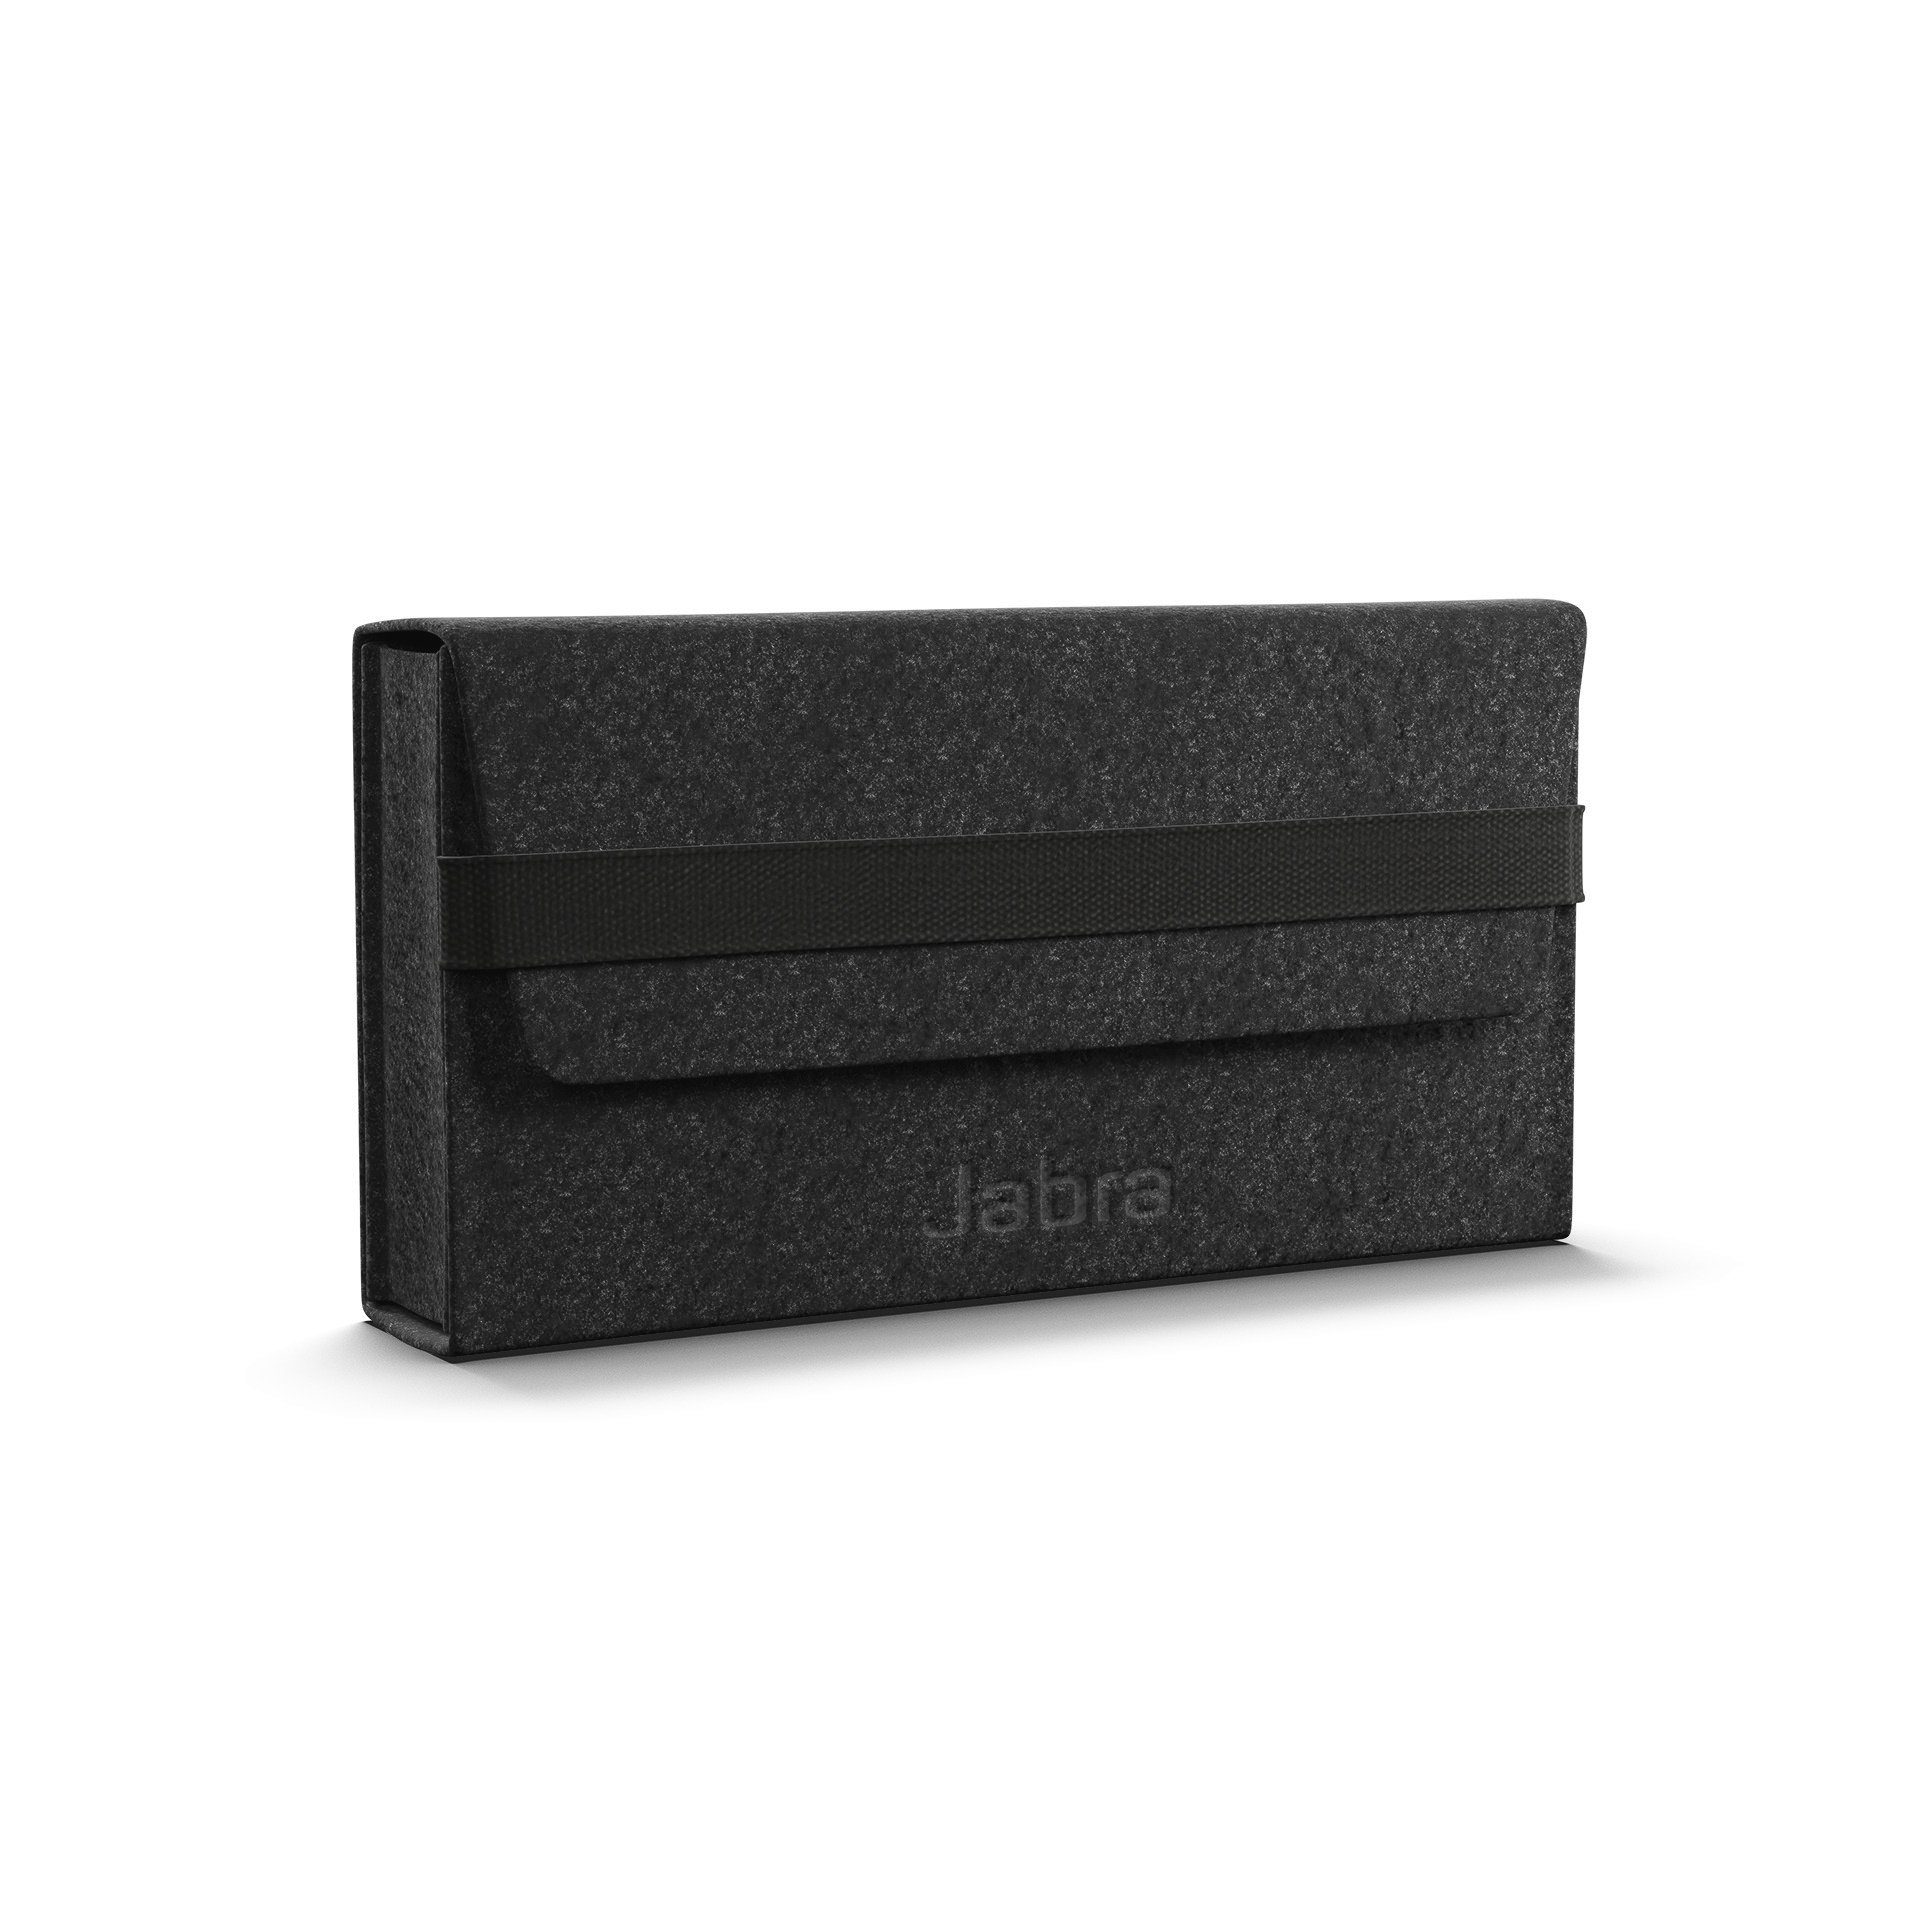 (ANC), Stereo UC Jabra 65 Noise (Active Bluetooth, Kopfhörer Cancelling USB-C) Evolve2 Flex